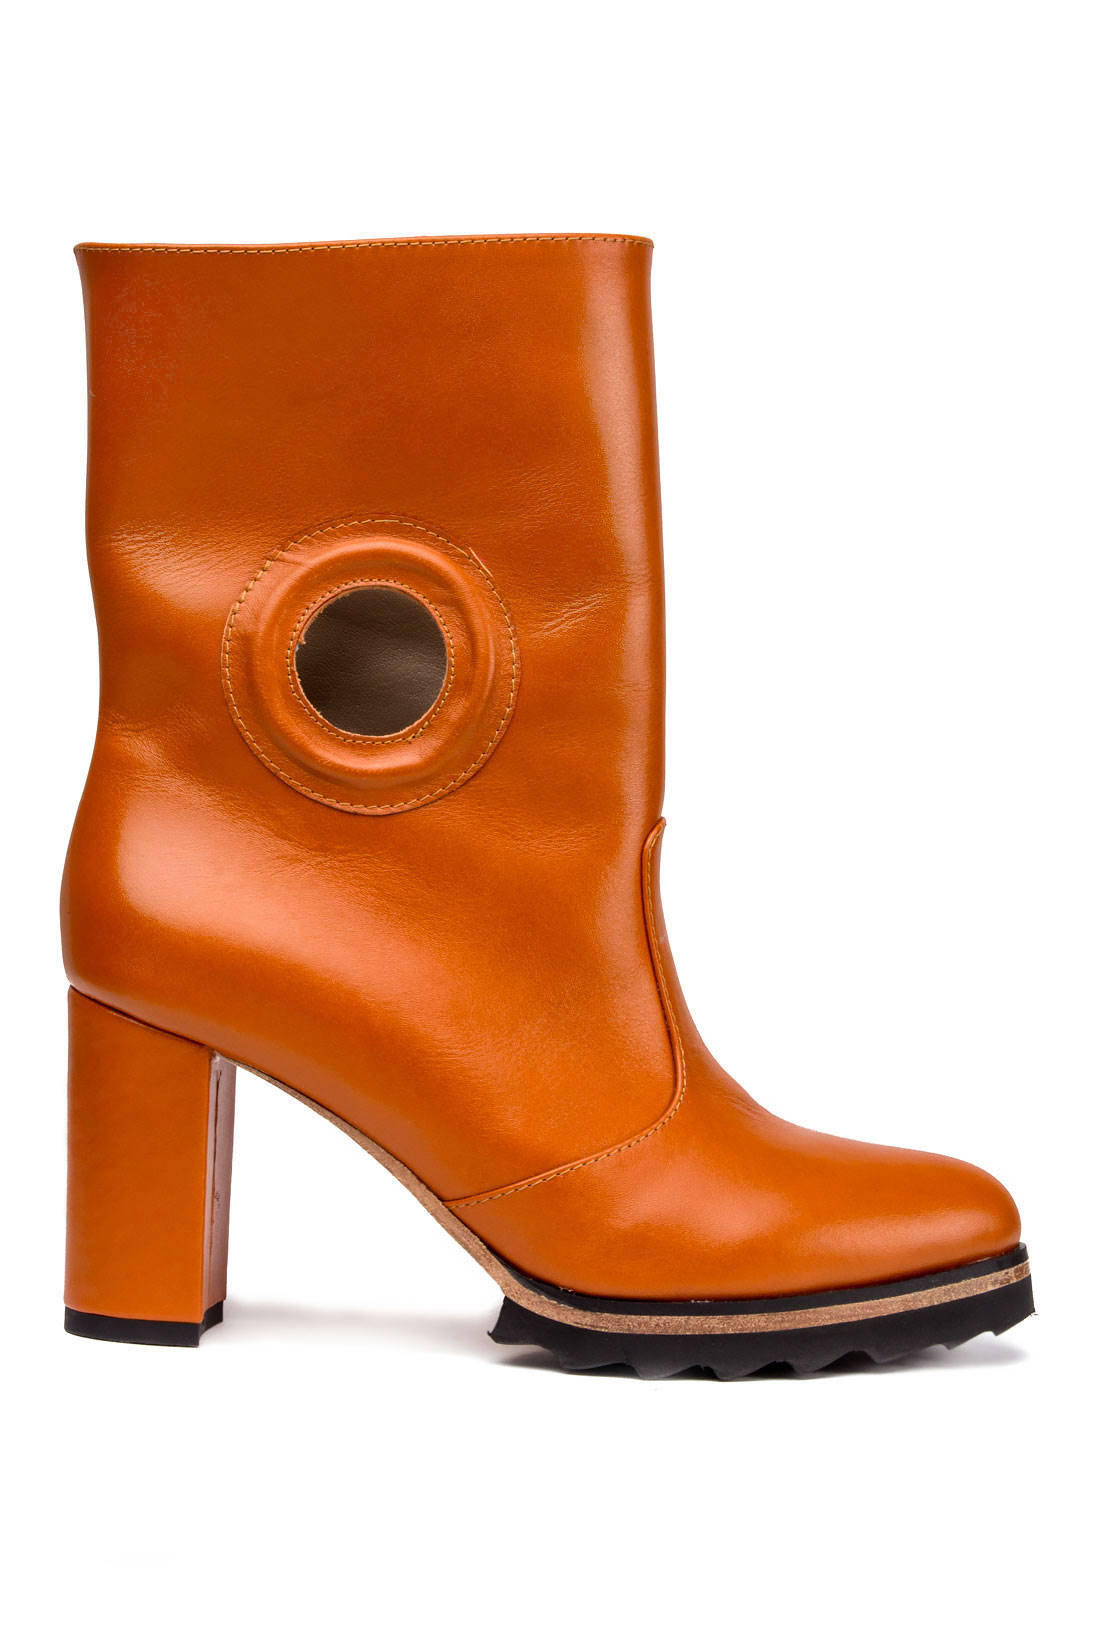 Leather boots with decoupage Mihaela Glavan  image 0